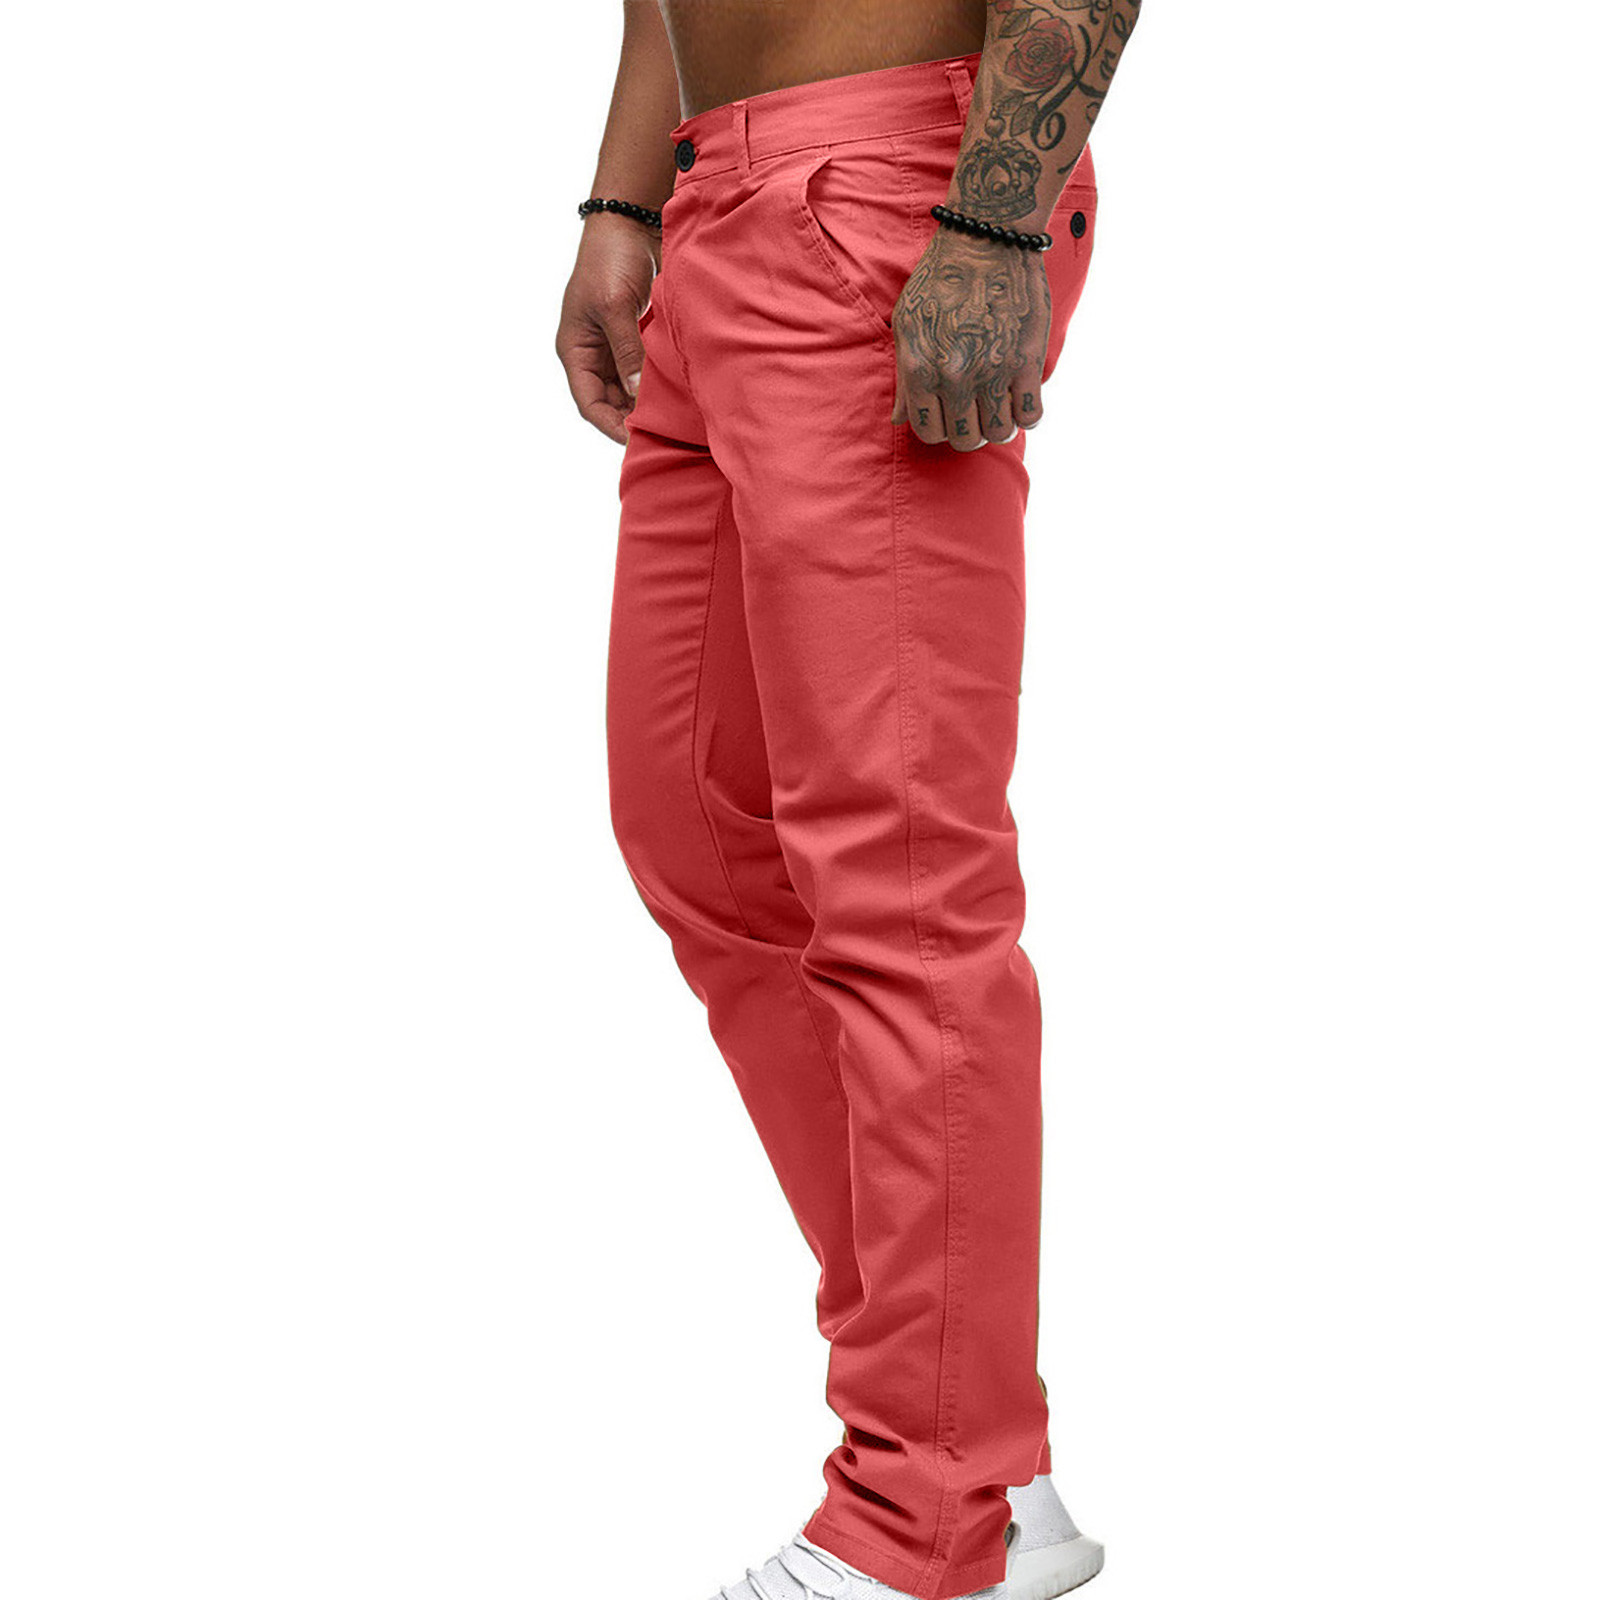 DeHolifer Mens Casual Chinos Pants Cotton Slacks Elastic Waistband Classic Fit Flat Front Khaki Pant Pink L - image 4 of 5